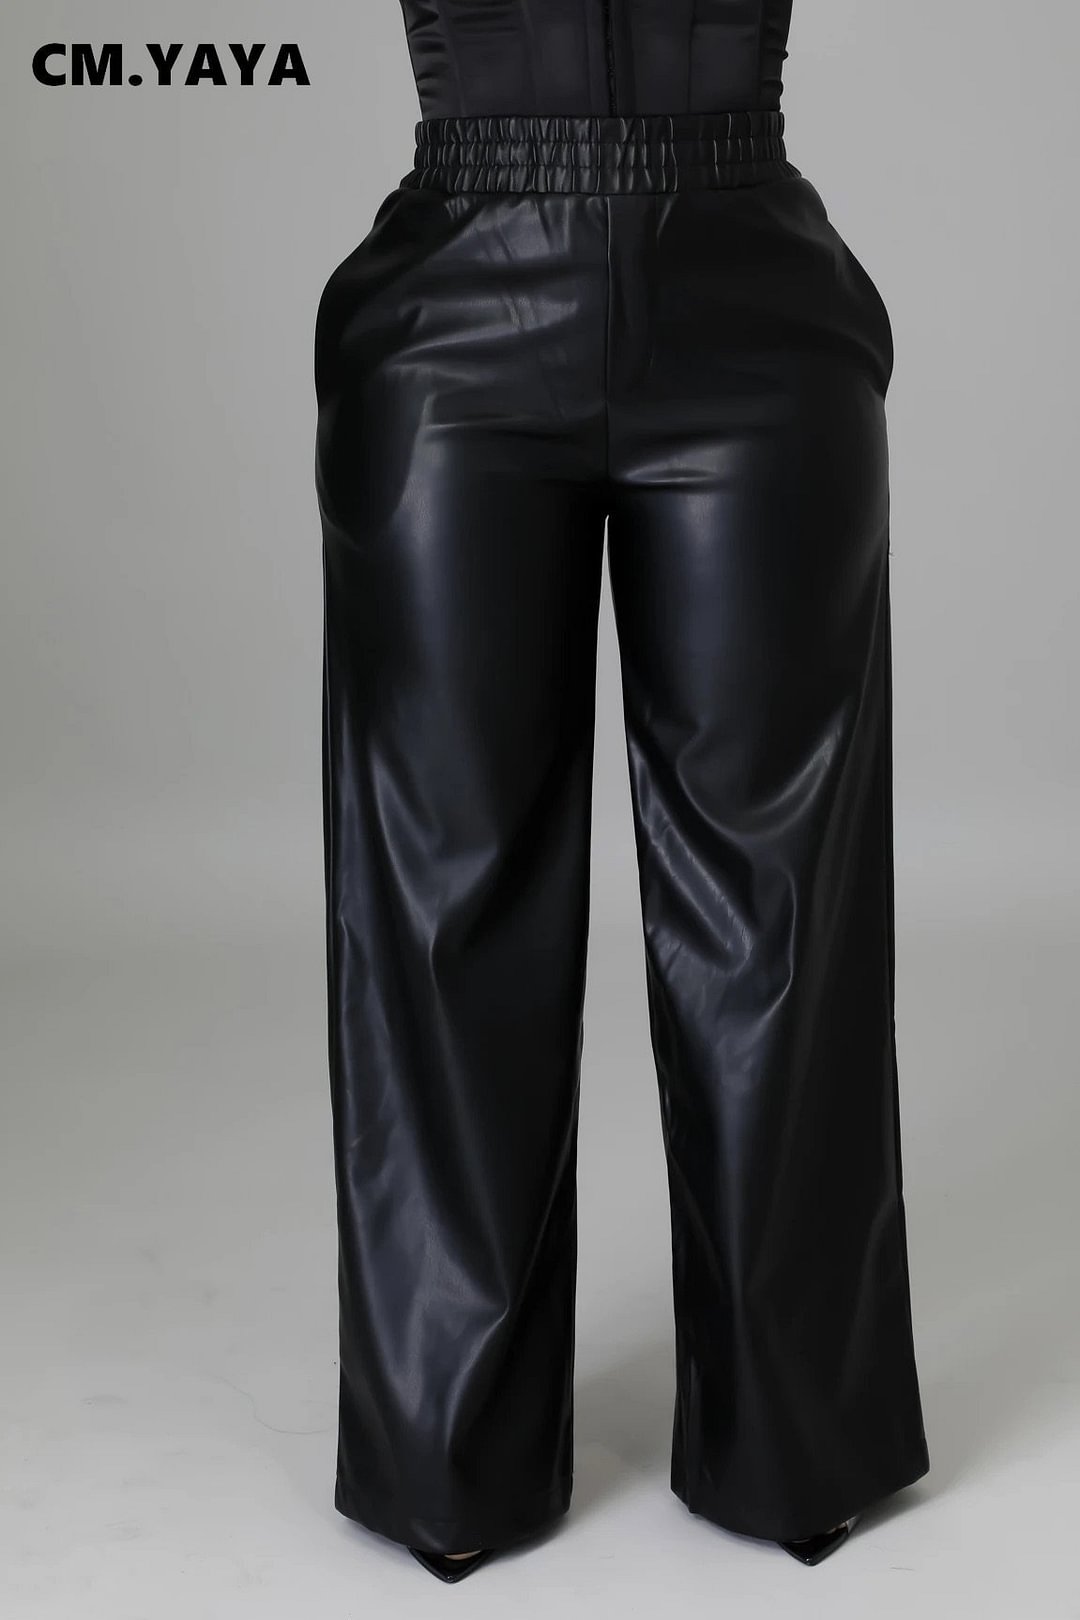 CM.YAYA Women Faux Leather Straight High Waist PU Pants INS Elegant Autumn Winter Solid Wide Leg Black Trousers